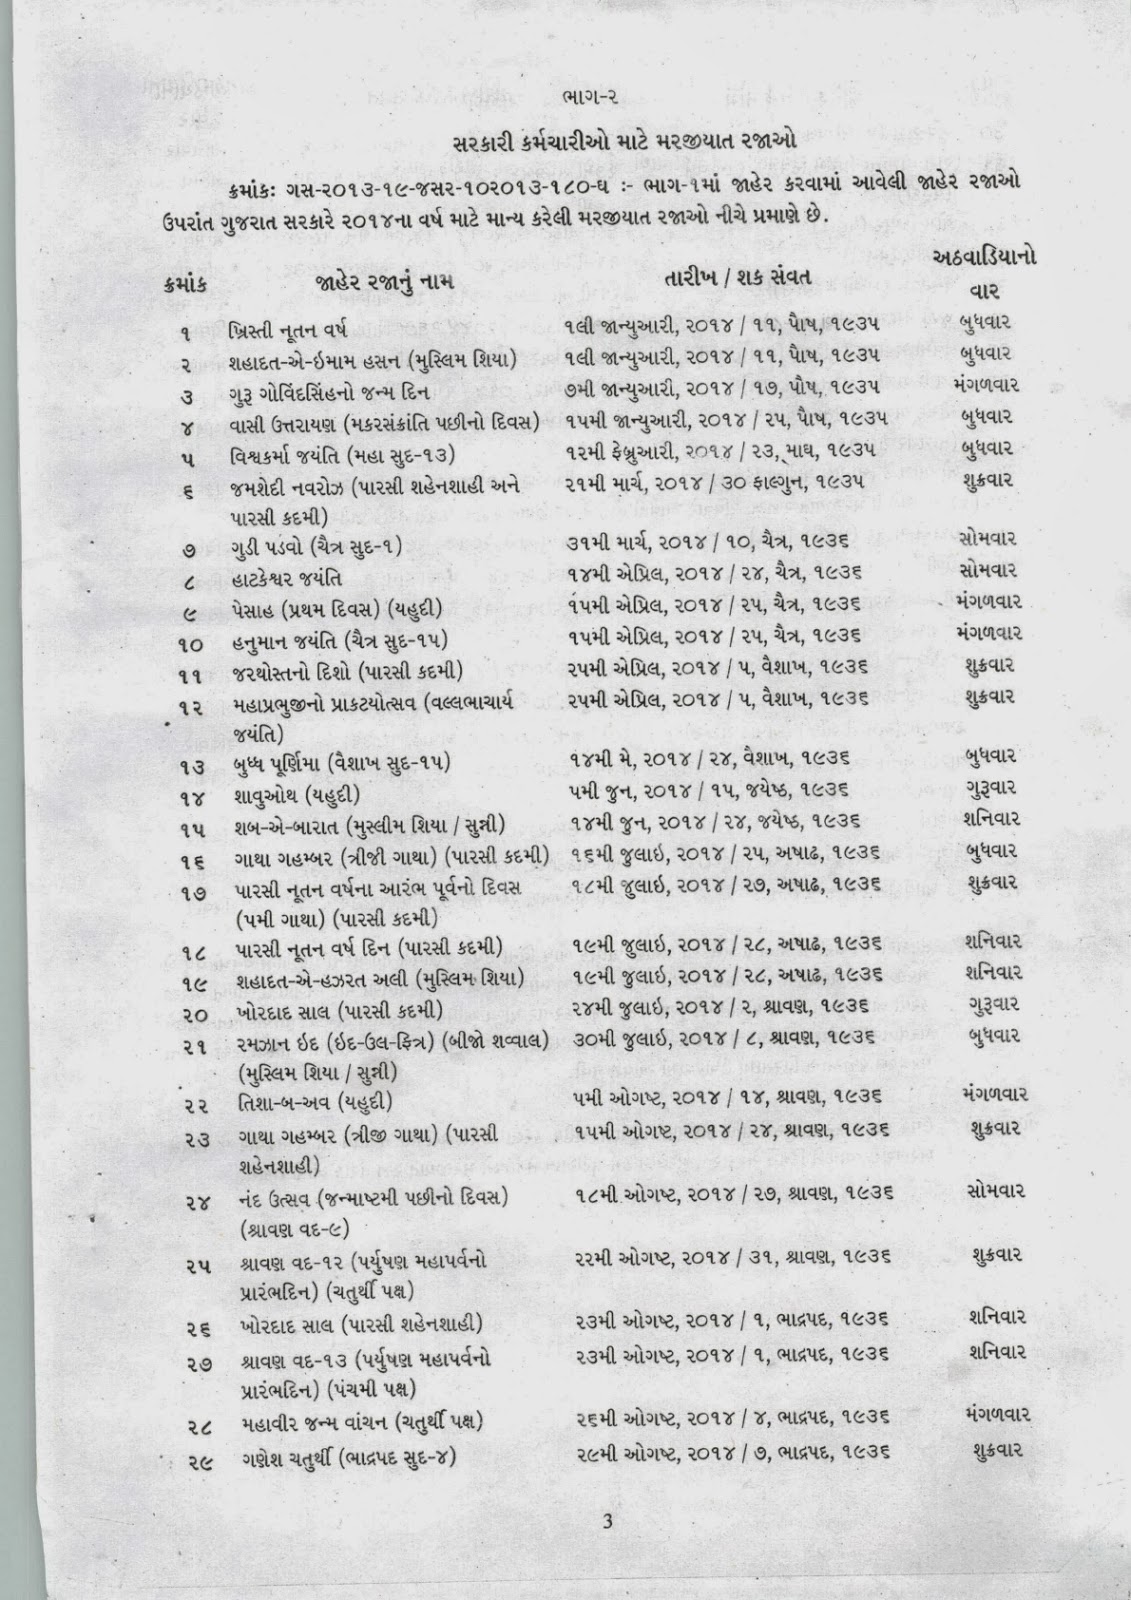 Sarkari Karmchario Mate Marjiyat Rajao List 2014